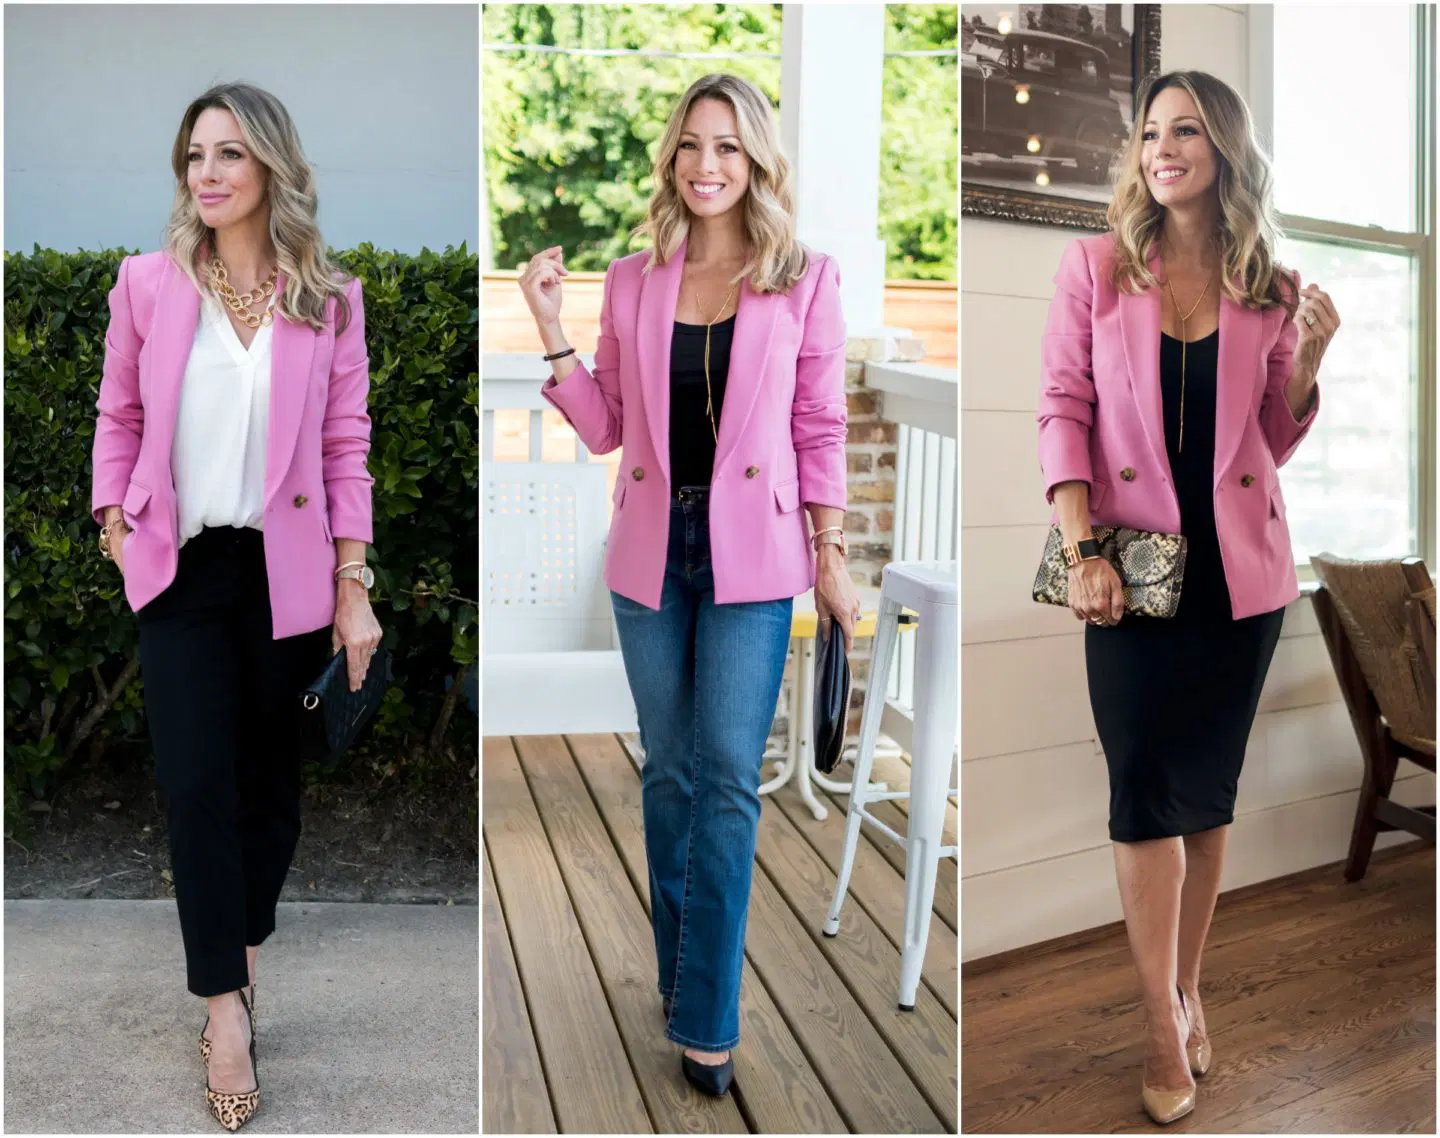 5 ways to wear light pink jeans  Light pink jeans, Light pink pants, Pink  pants outfit